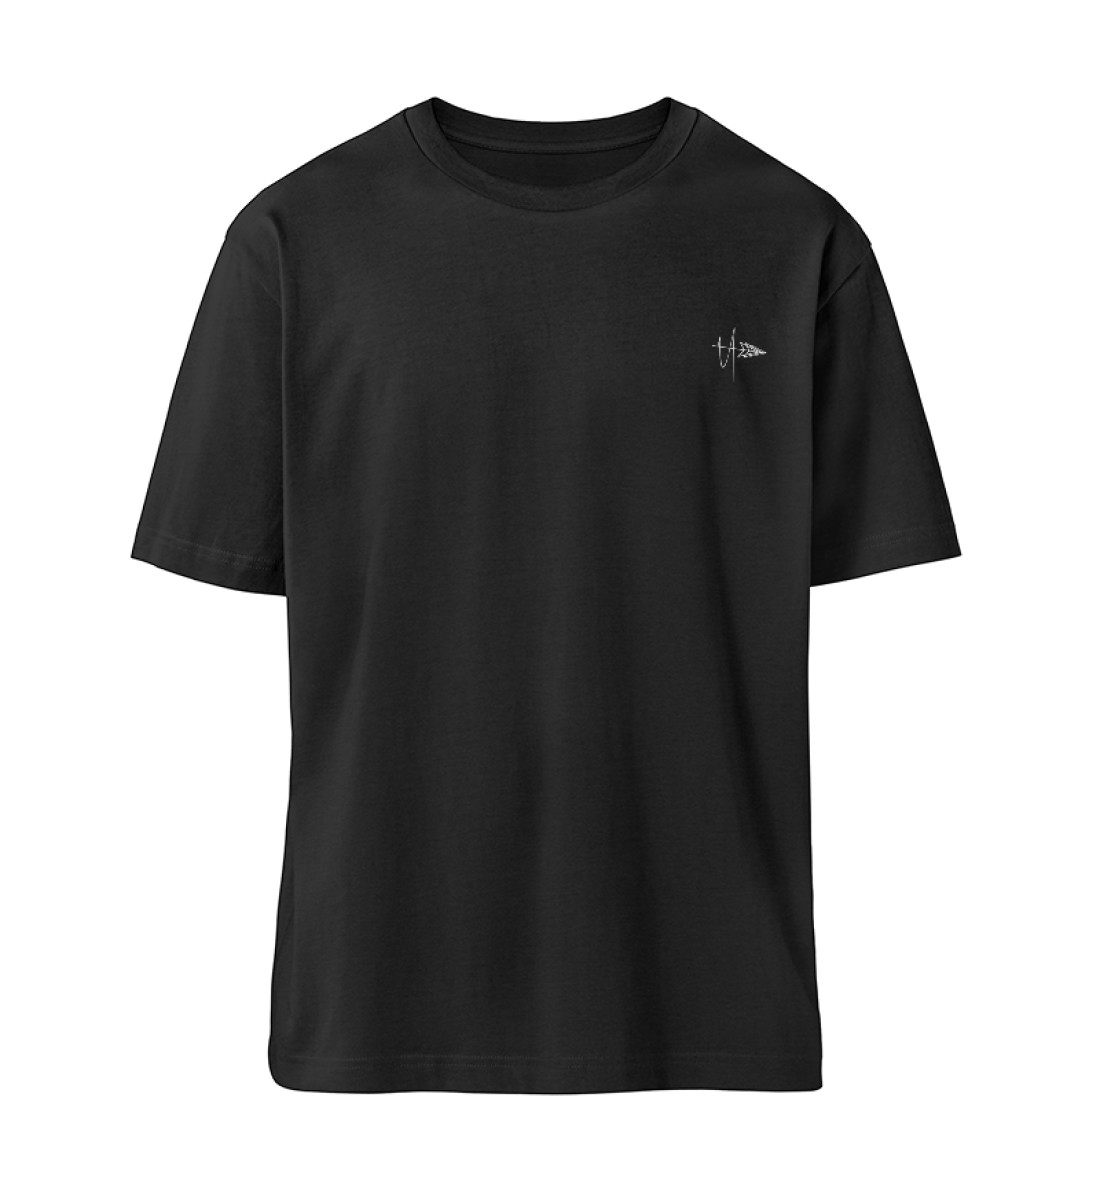 shirt // palm // white - Fuser Relaxed Shirt ST/ST-16